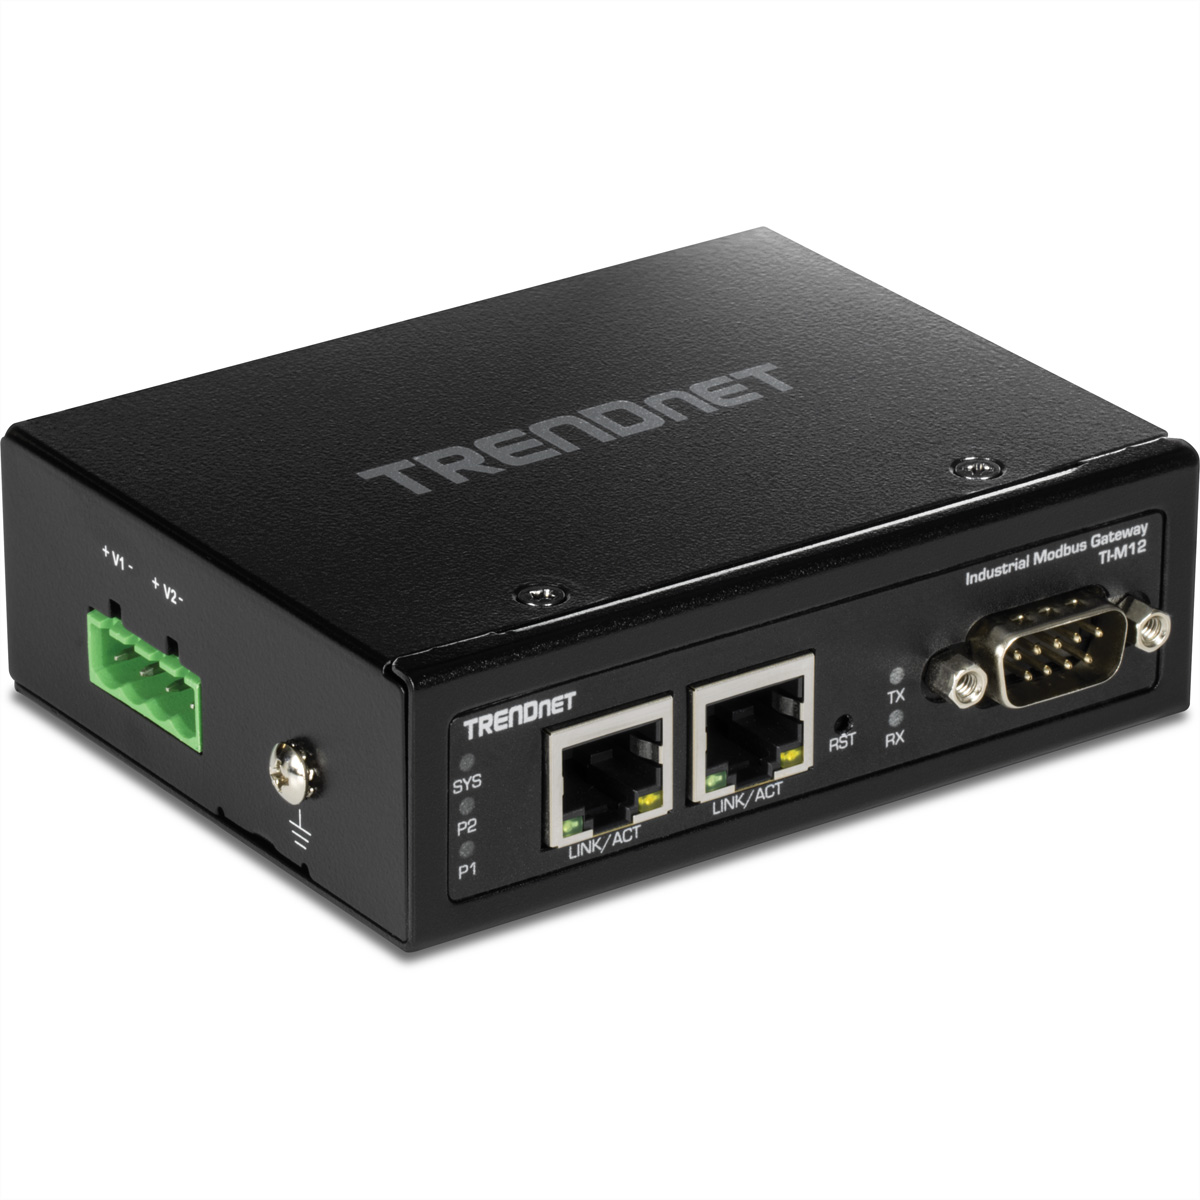 Ethernet TRENDNET Switch Modbus Industrial Gateway Fast TI-M12